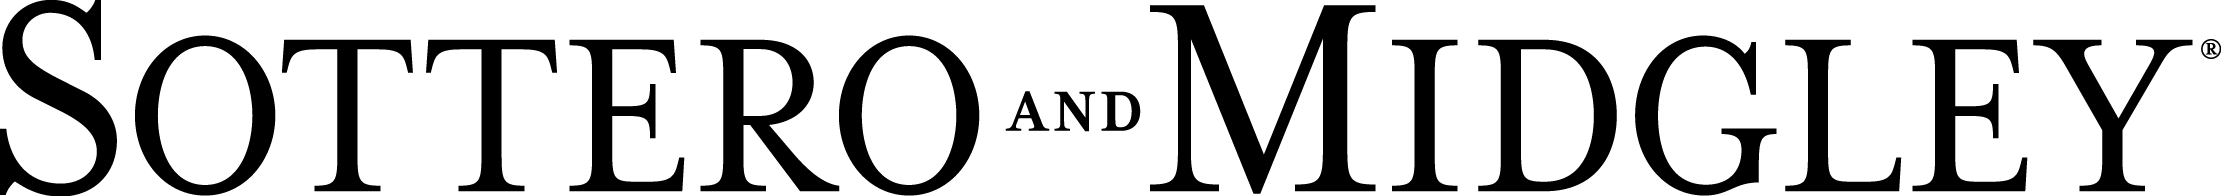 SotteroAndMidgley Logo Black